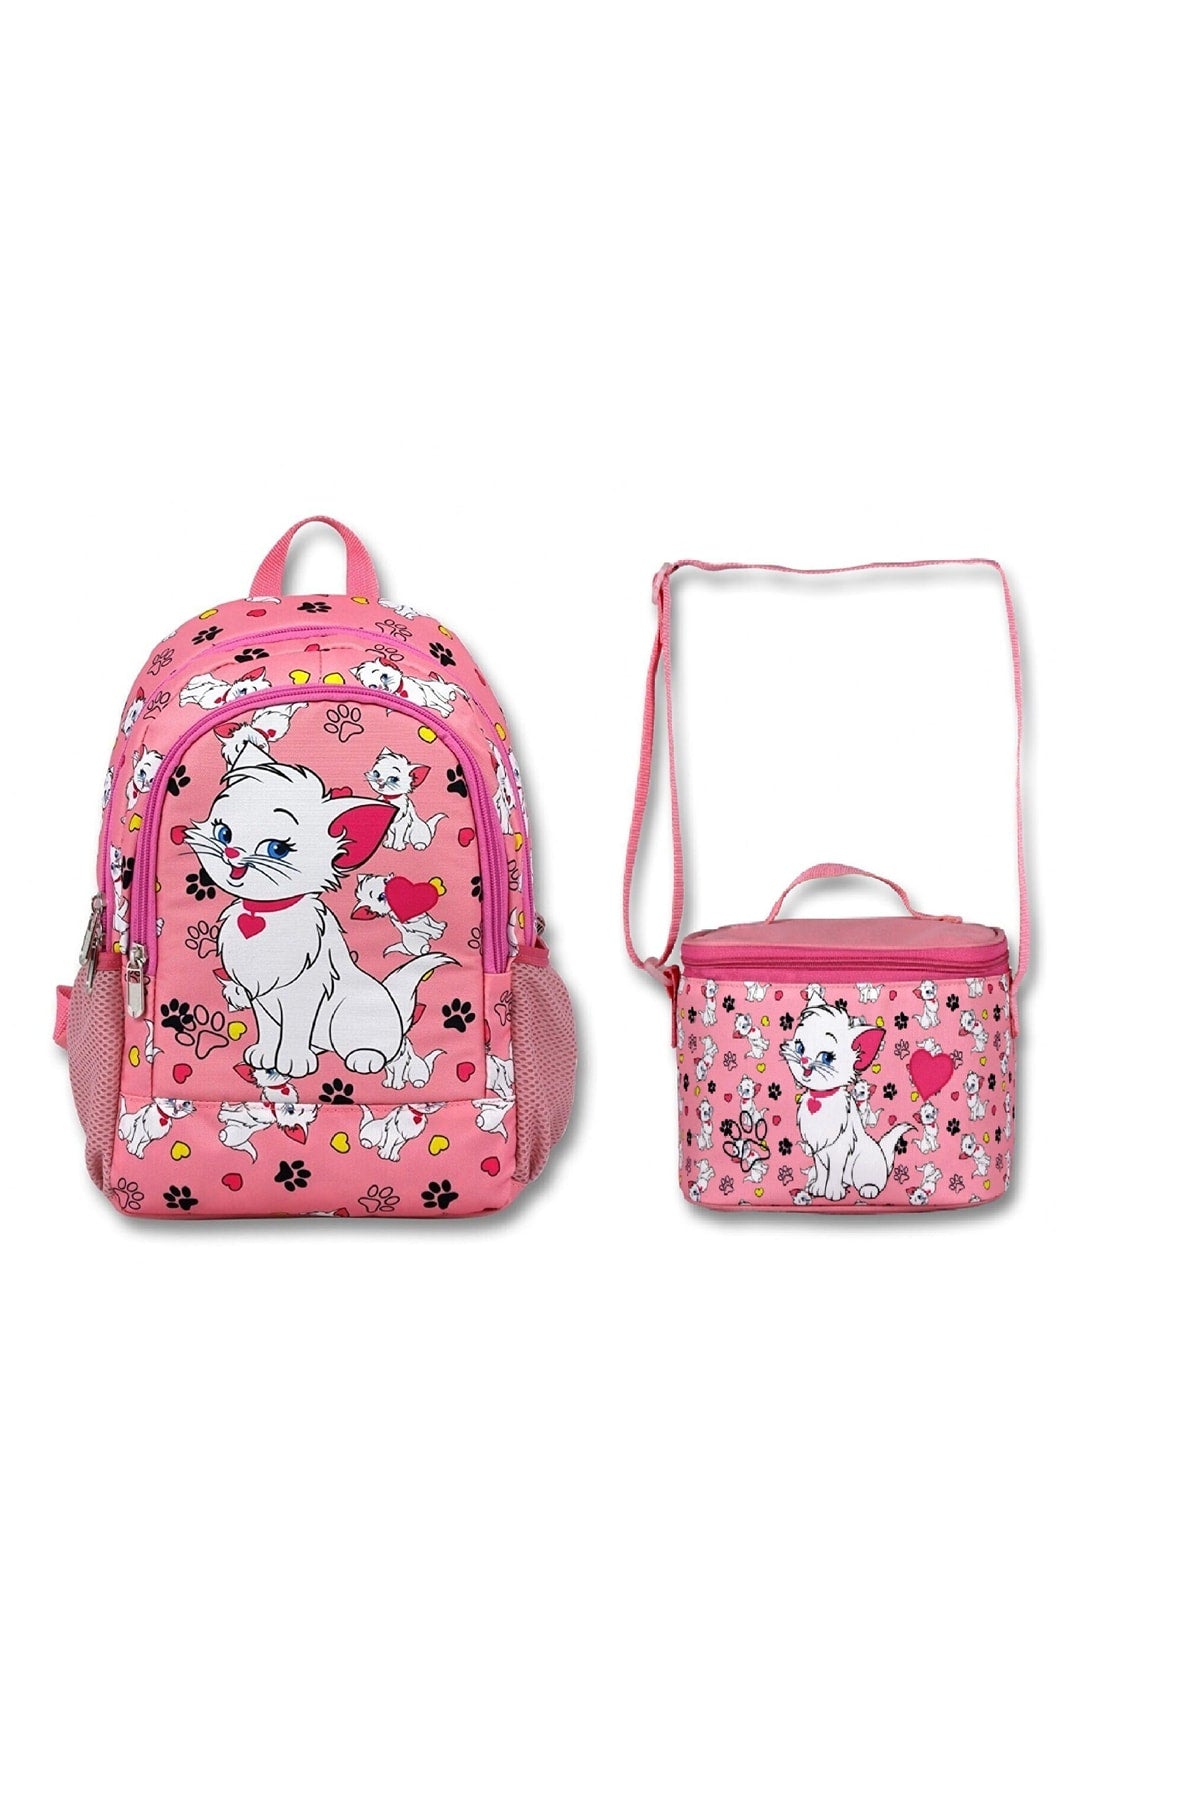 -Hope Bag-Kindergarten Cute Cat Printed School Bag And Lunch Box Set